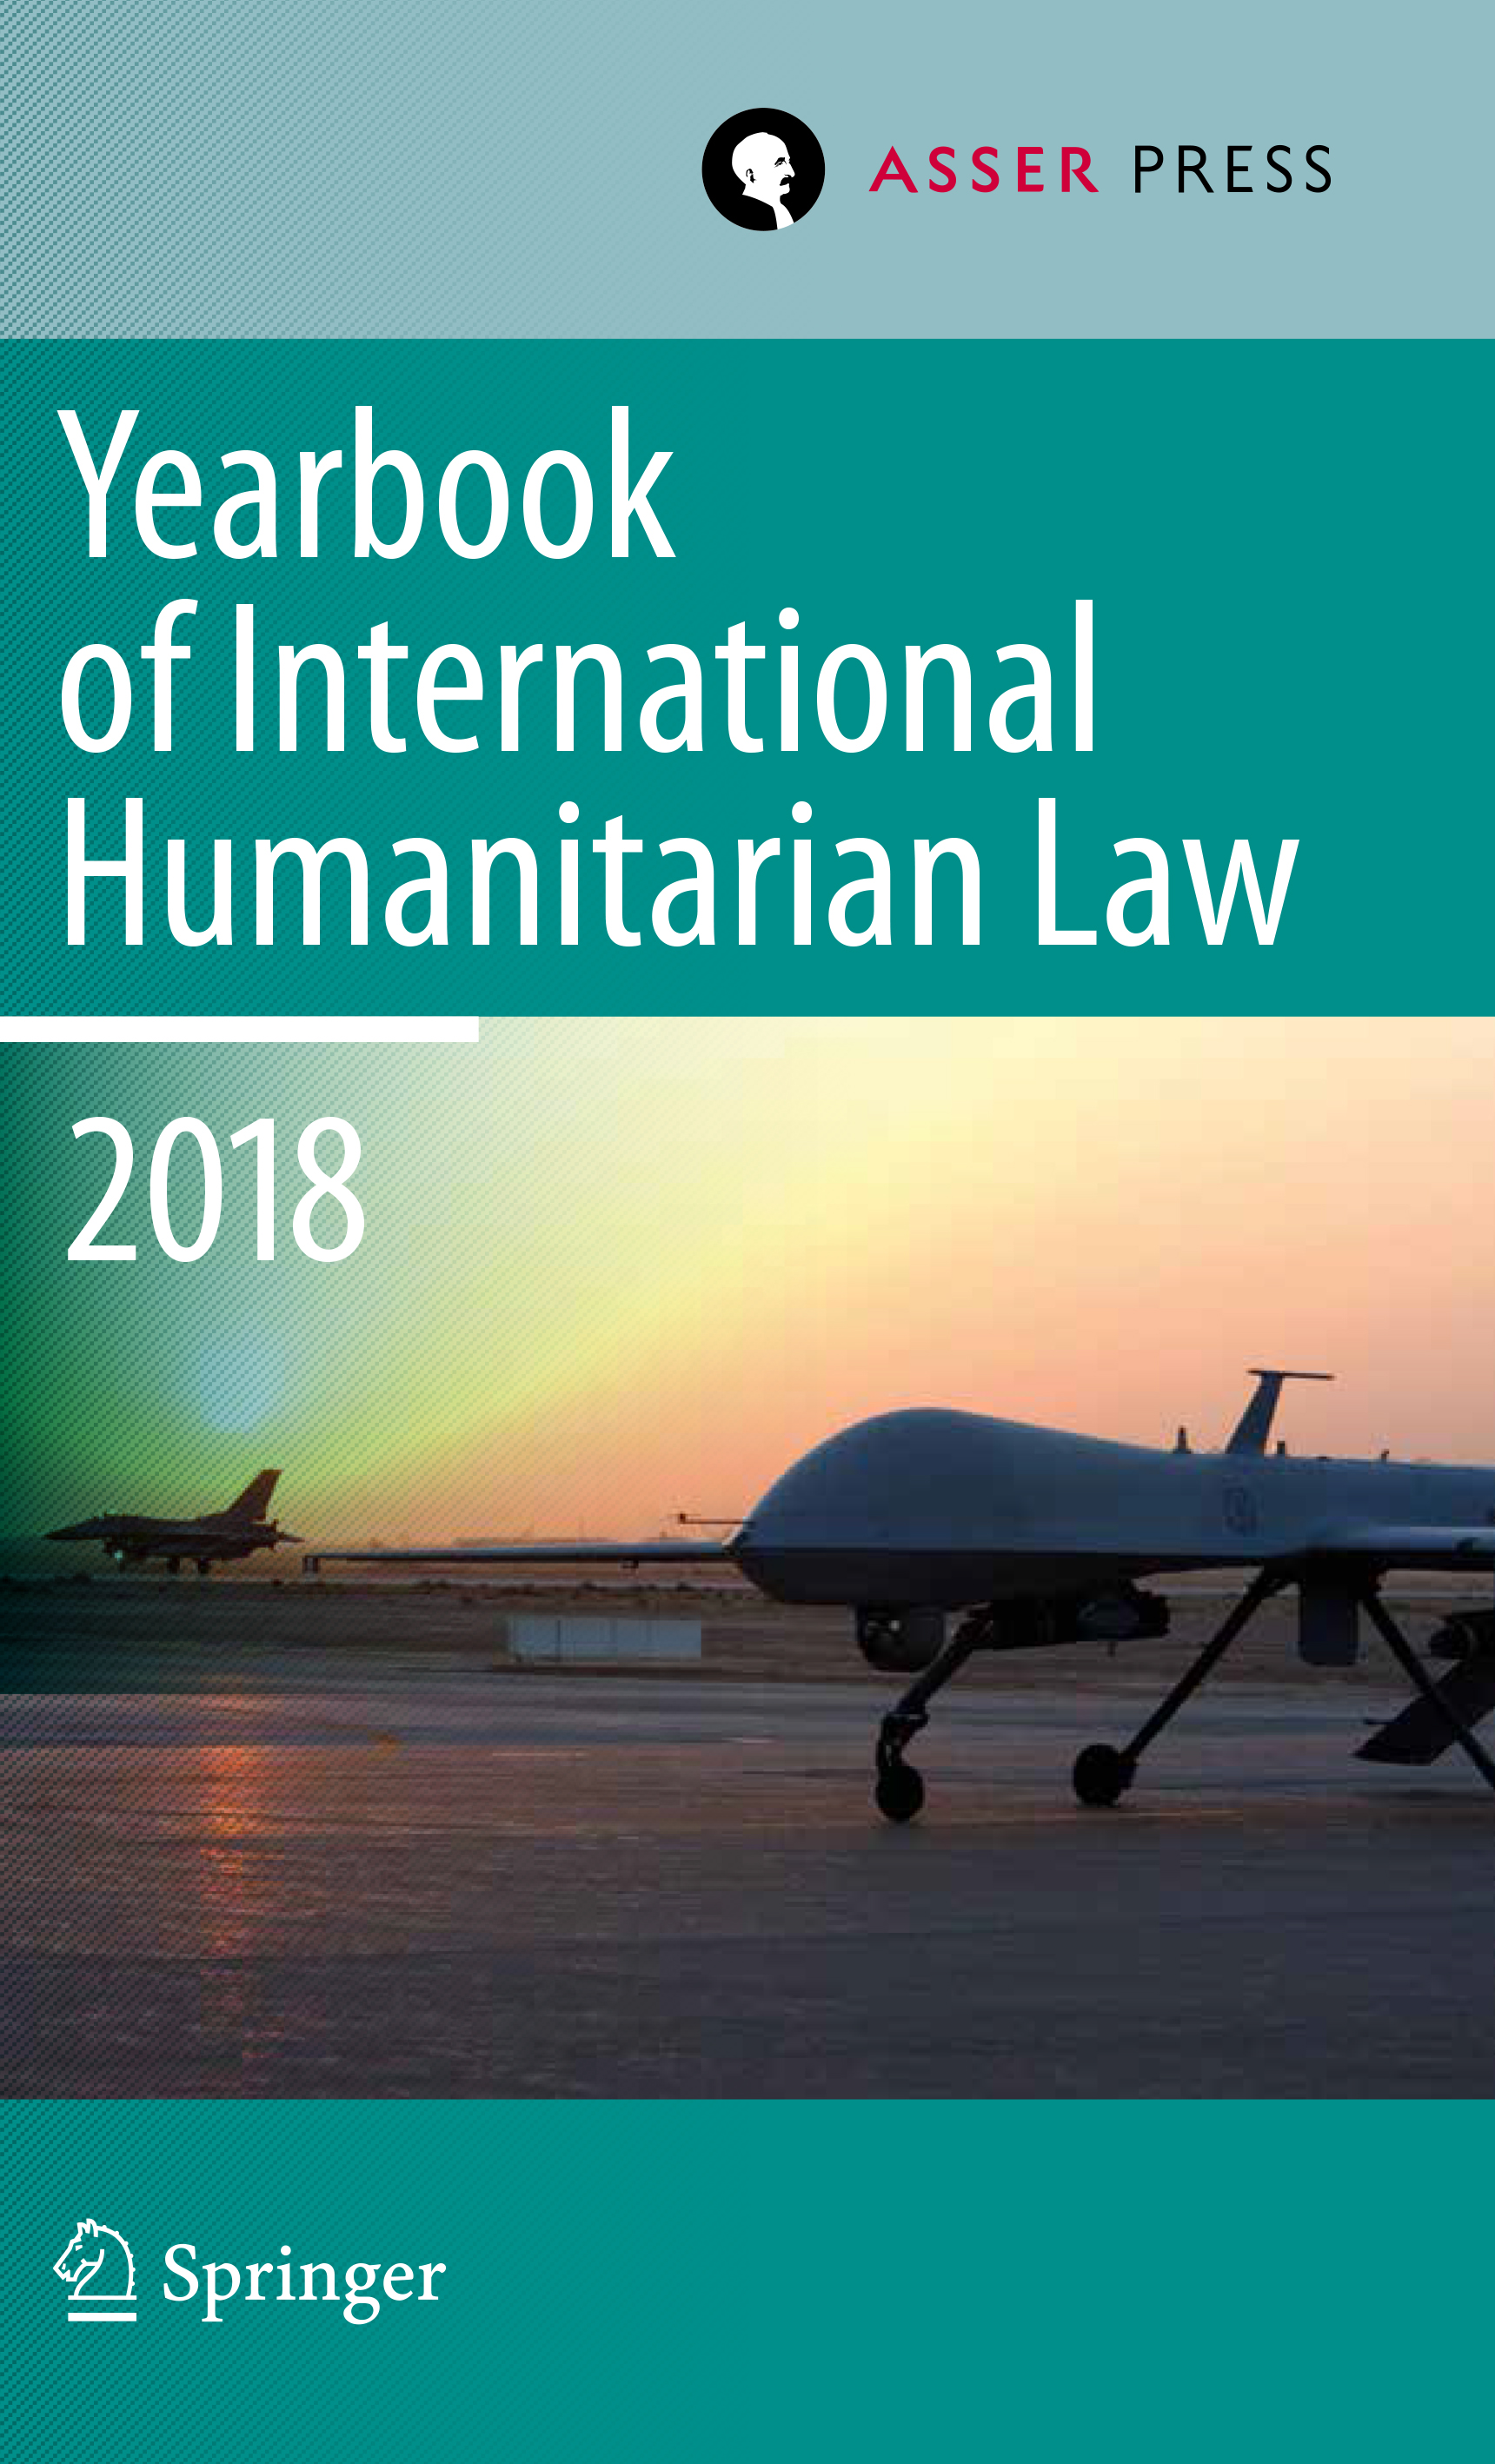 Yearbook of International Humanitarian Law, Volume 21, 2018